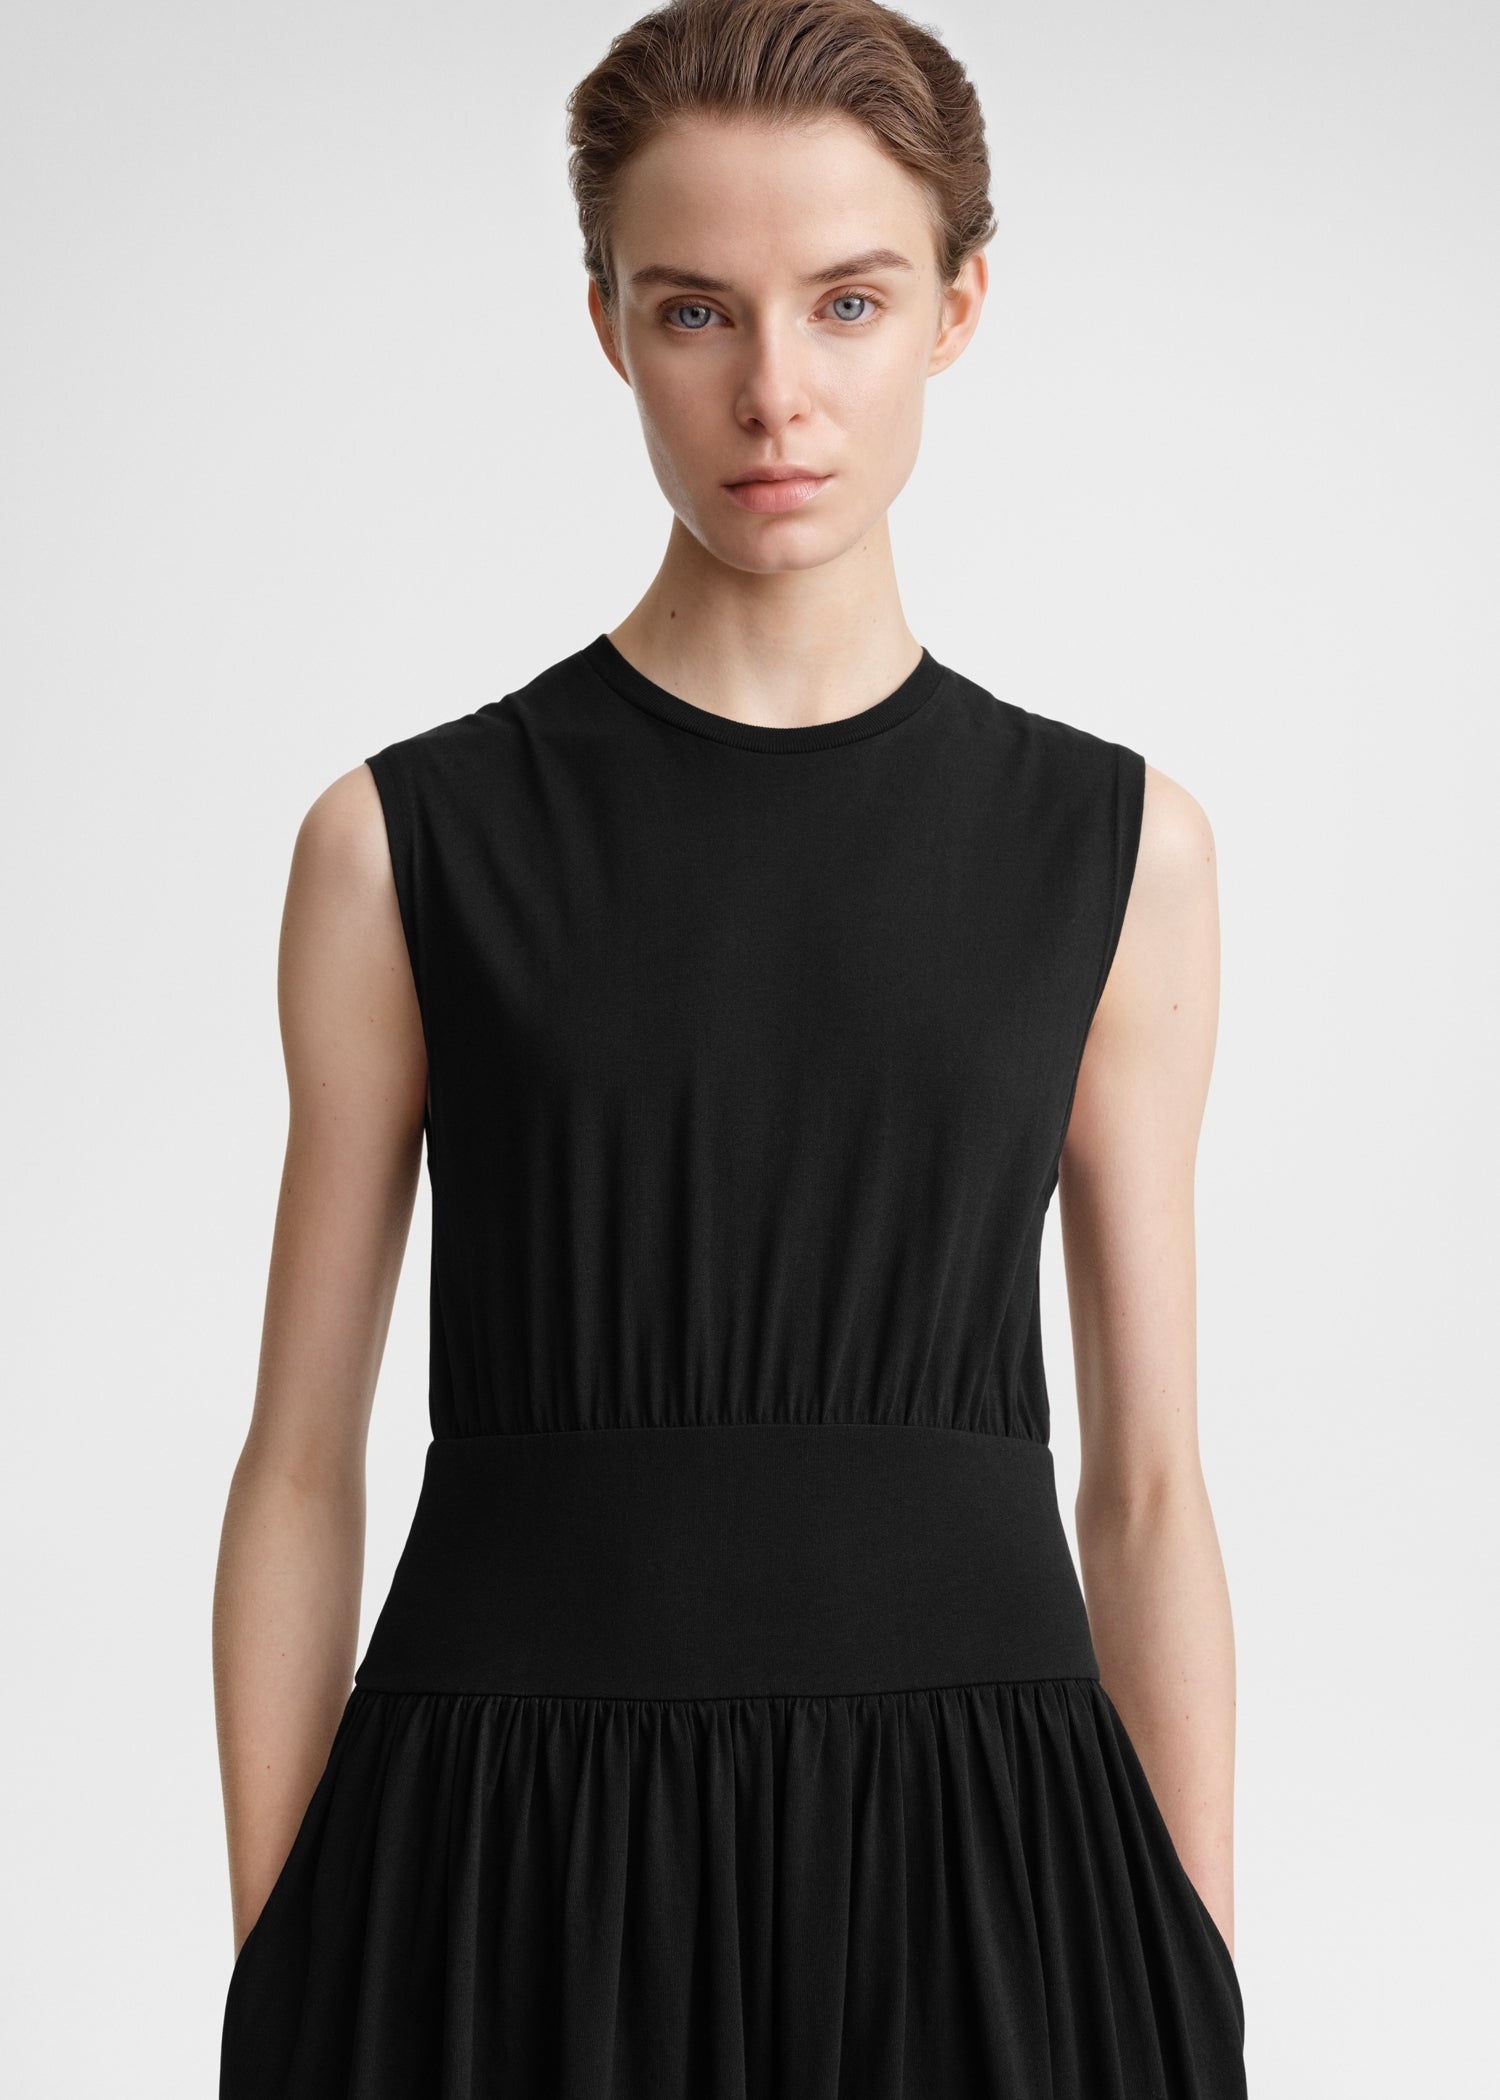 Sleeveless cotton tee dress black - 5